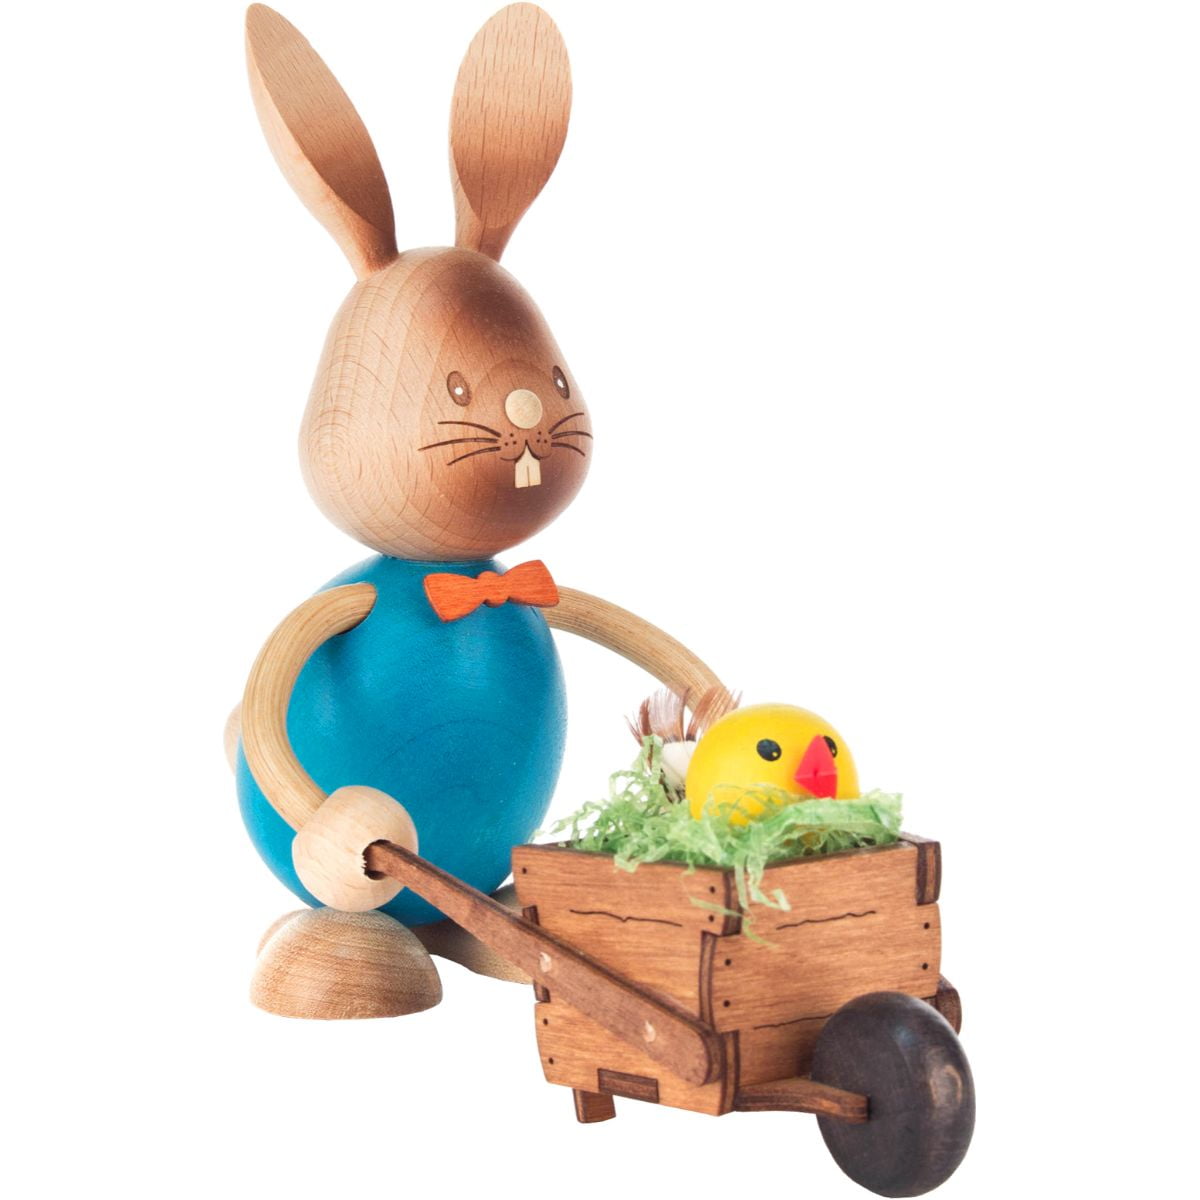 224-648-8 Dregeno Easter Figure - Rabbit With Wheelbarrow